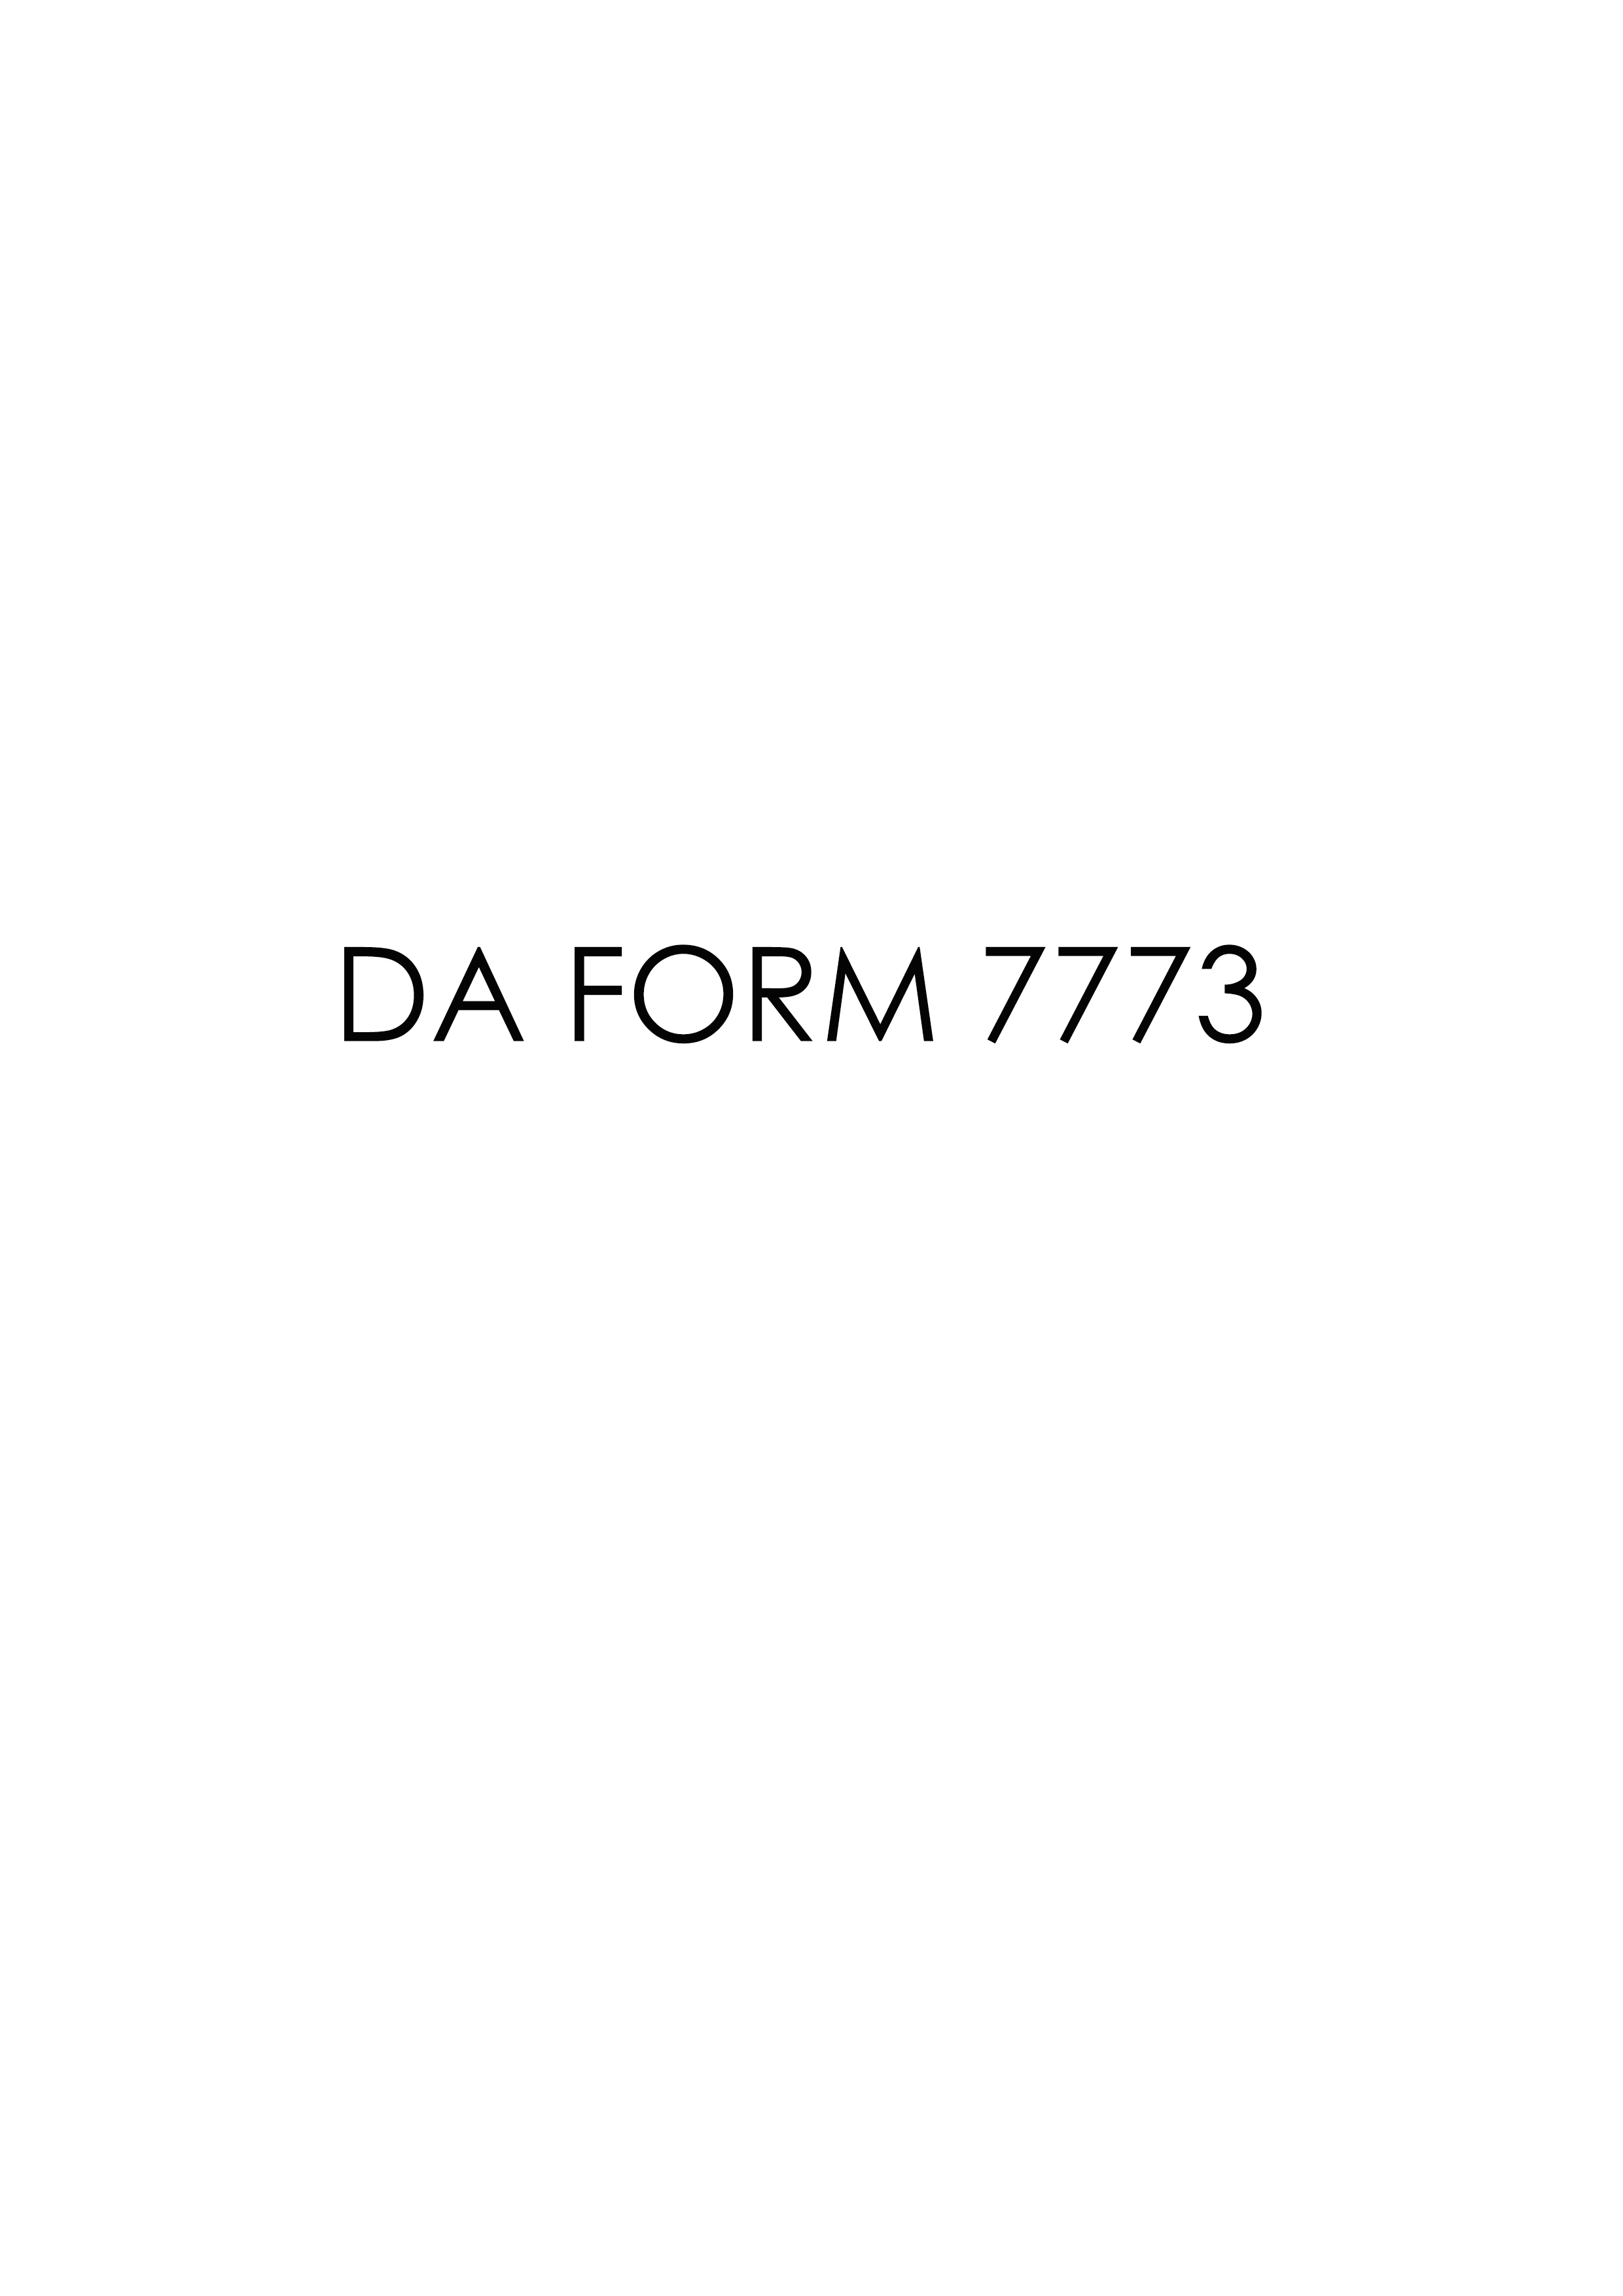 Download da 7773 Form